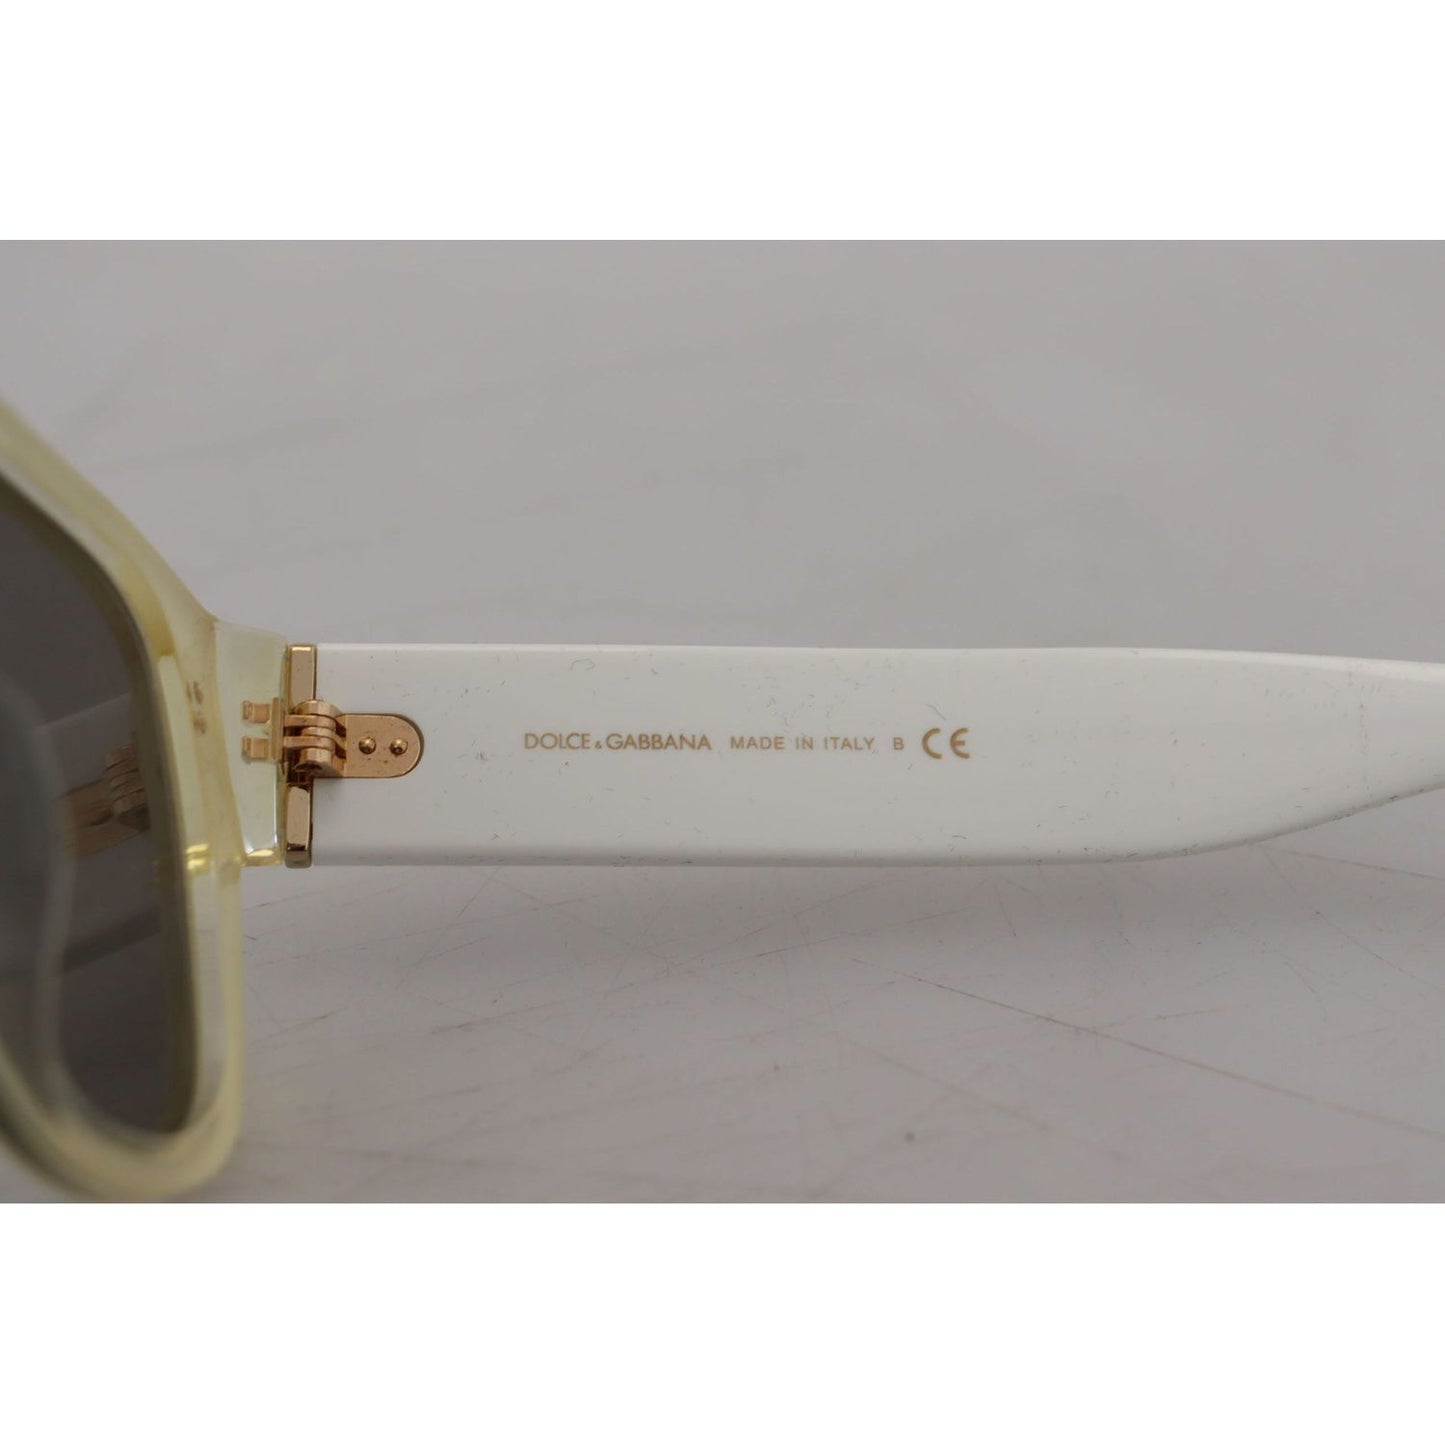 Dolce & Gabbana Elegant White Acetate Sunglasses for Women white-acetate-full-rim-frame-shades-dg4356f-sunglasses IMG_4040-scaled-a256f318-aa6.jpg